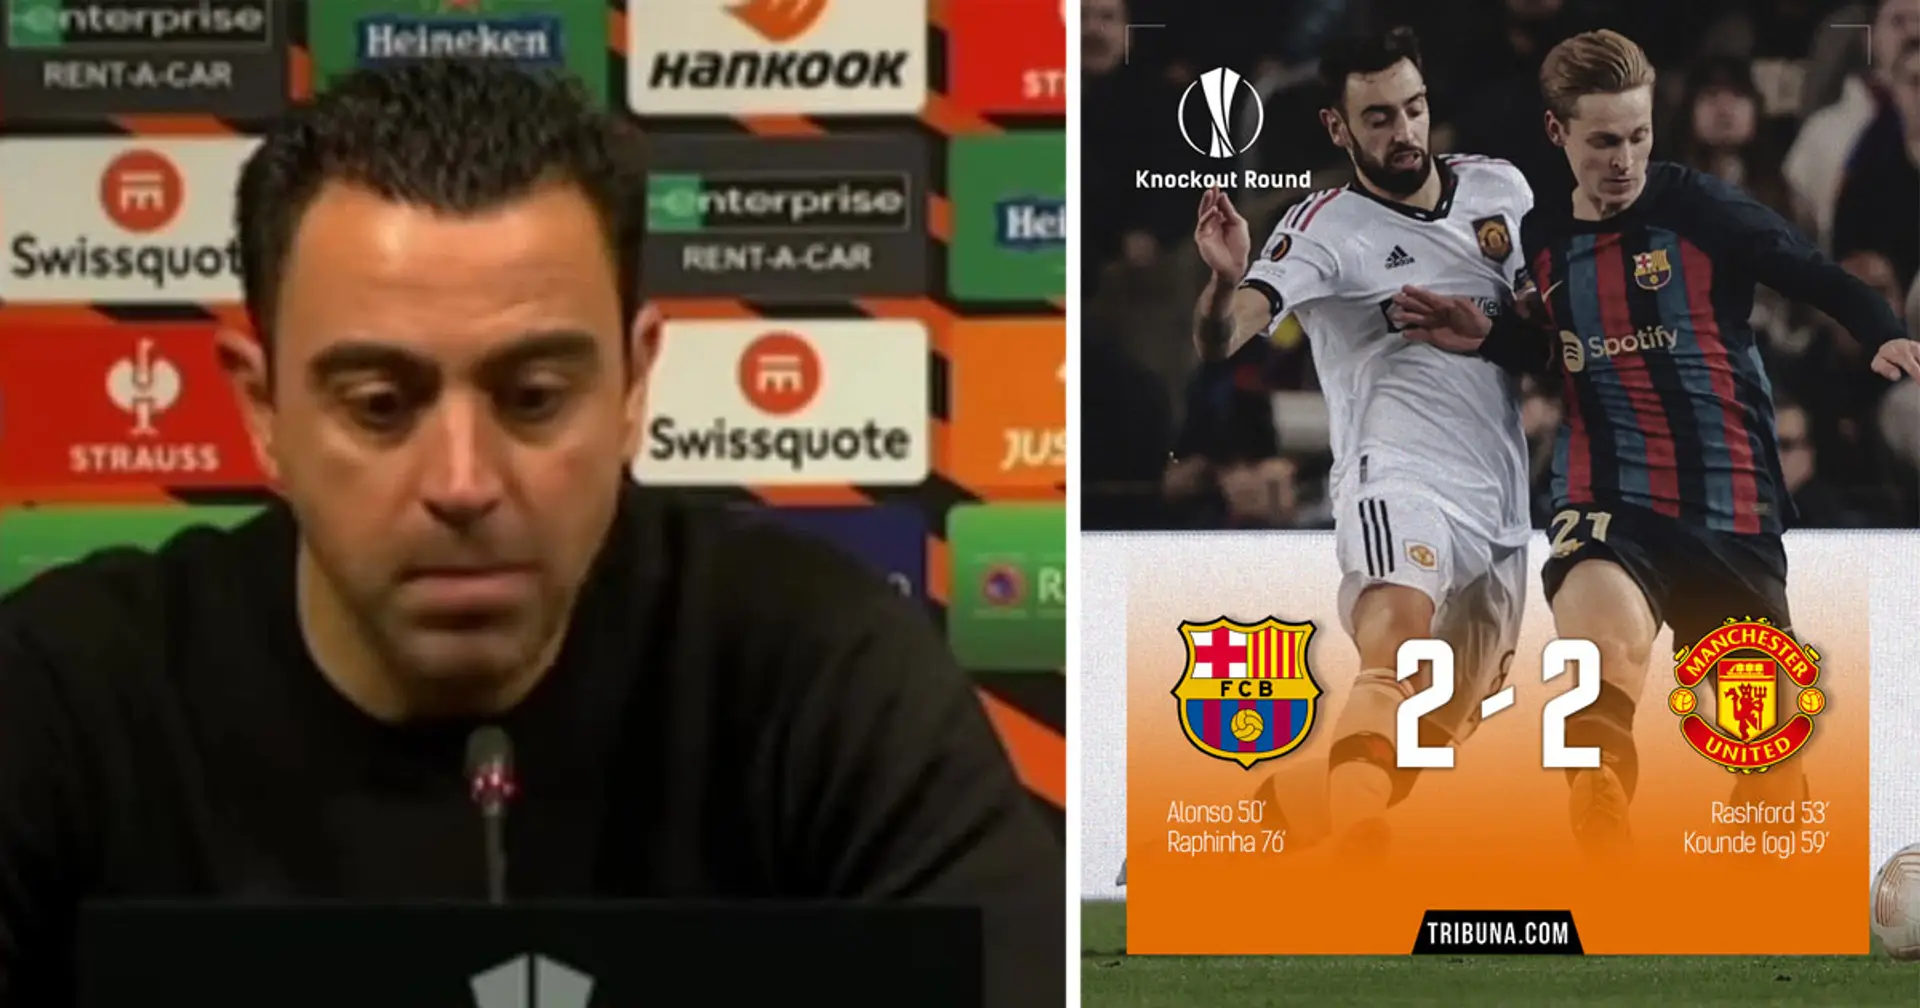 Just one win - Xavi continues poor European record at Camp Nou